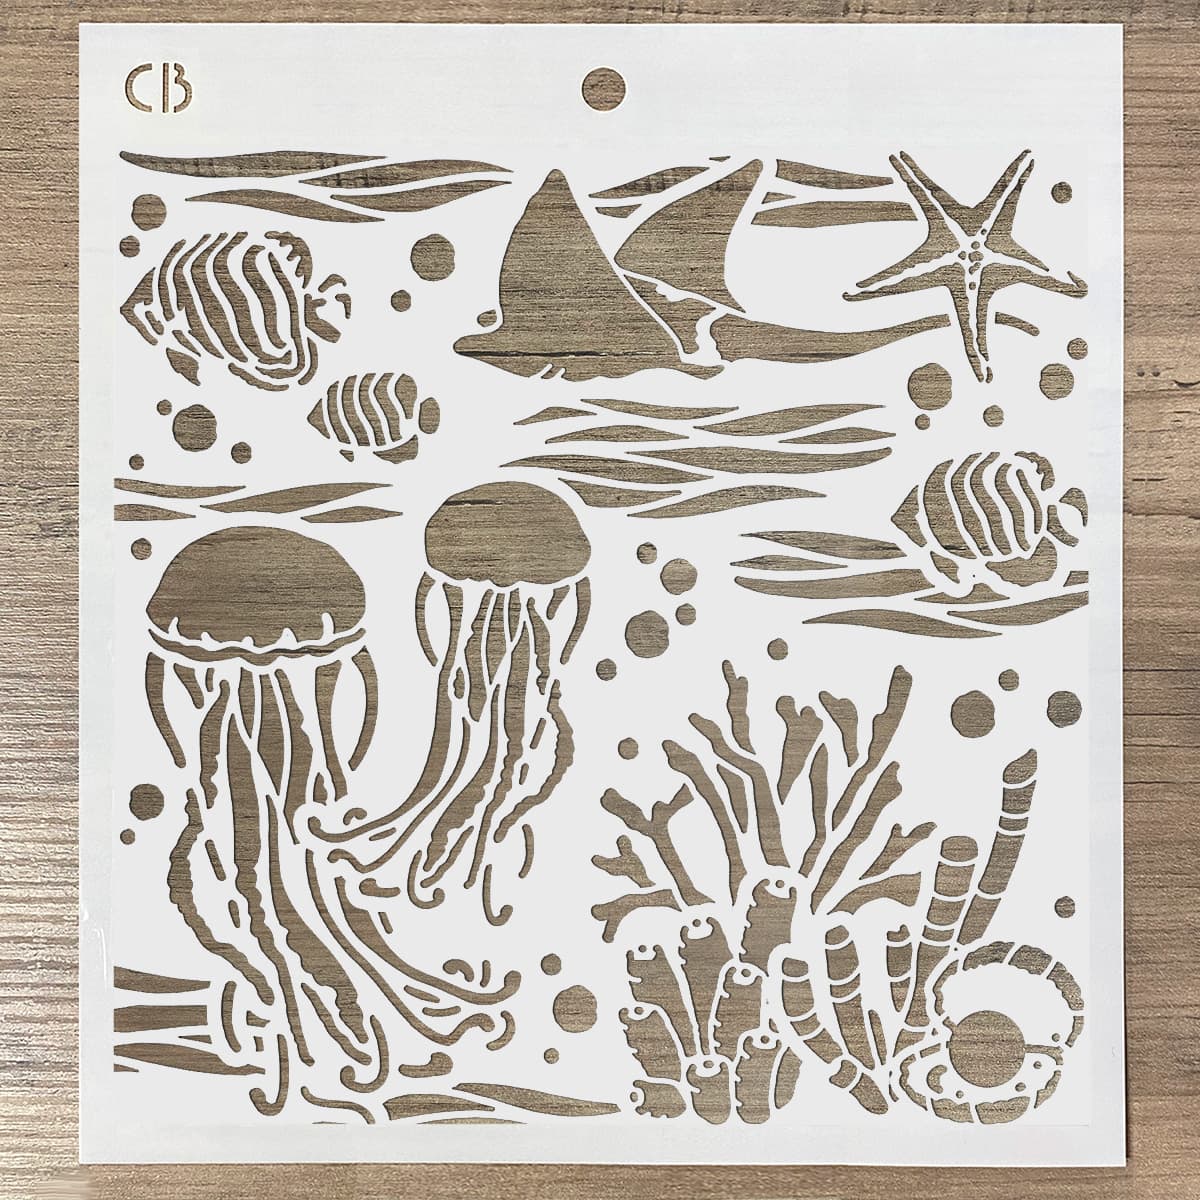 Ciao Bella Texture Stencil 8x8 Underwater